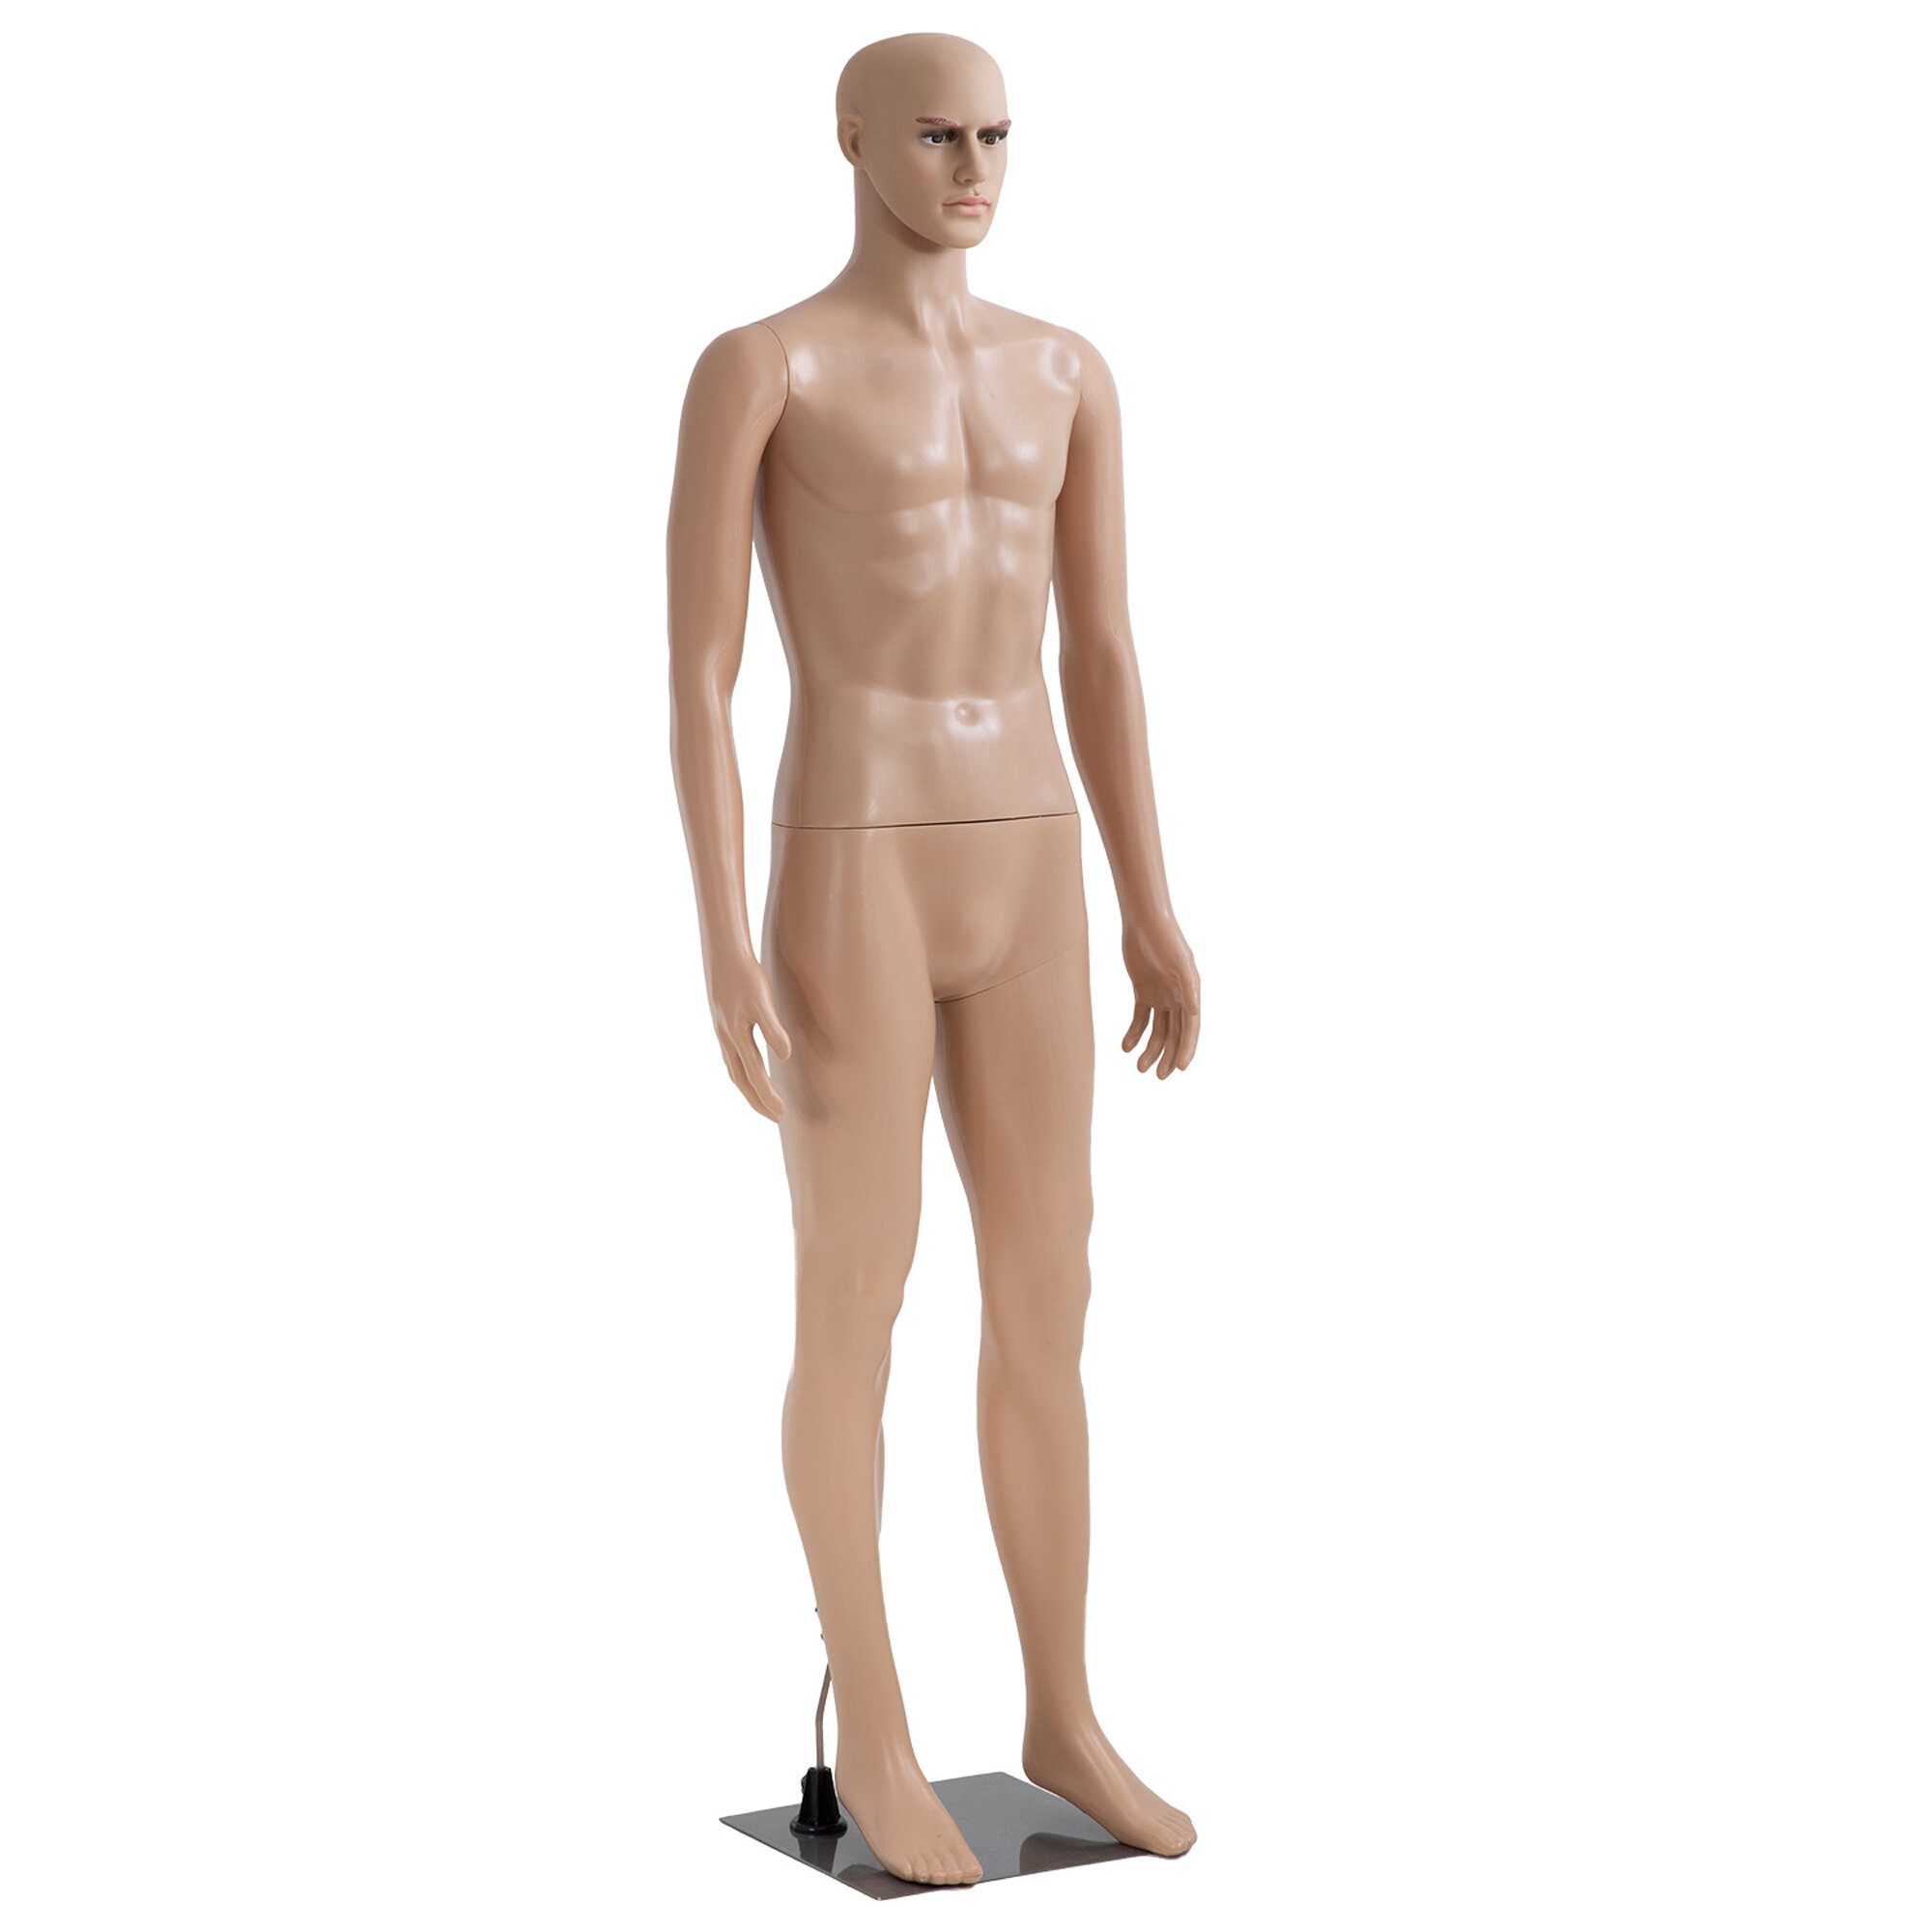 FDW Male Mannequin Full Body 73 H x 16 W x 12 D Dress Form